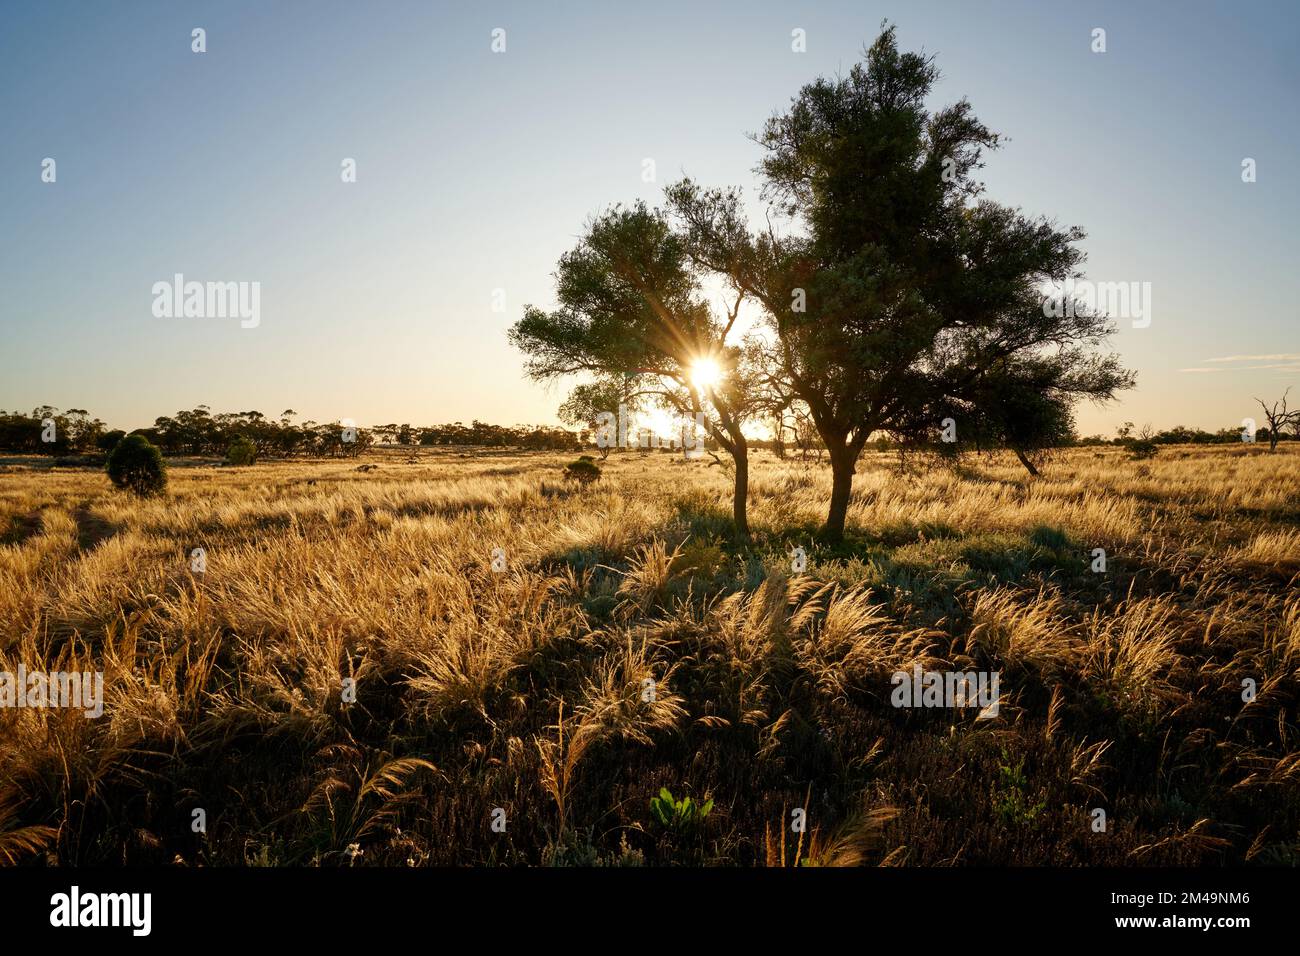 Spring landscape in northwestern Victoria, Australia. Late afternoon light illuminates the native Spear Grass in this semi-arid location. Stock Photo